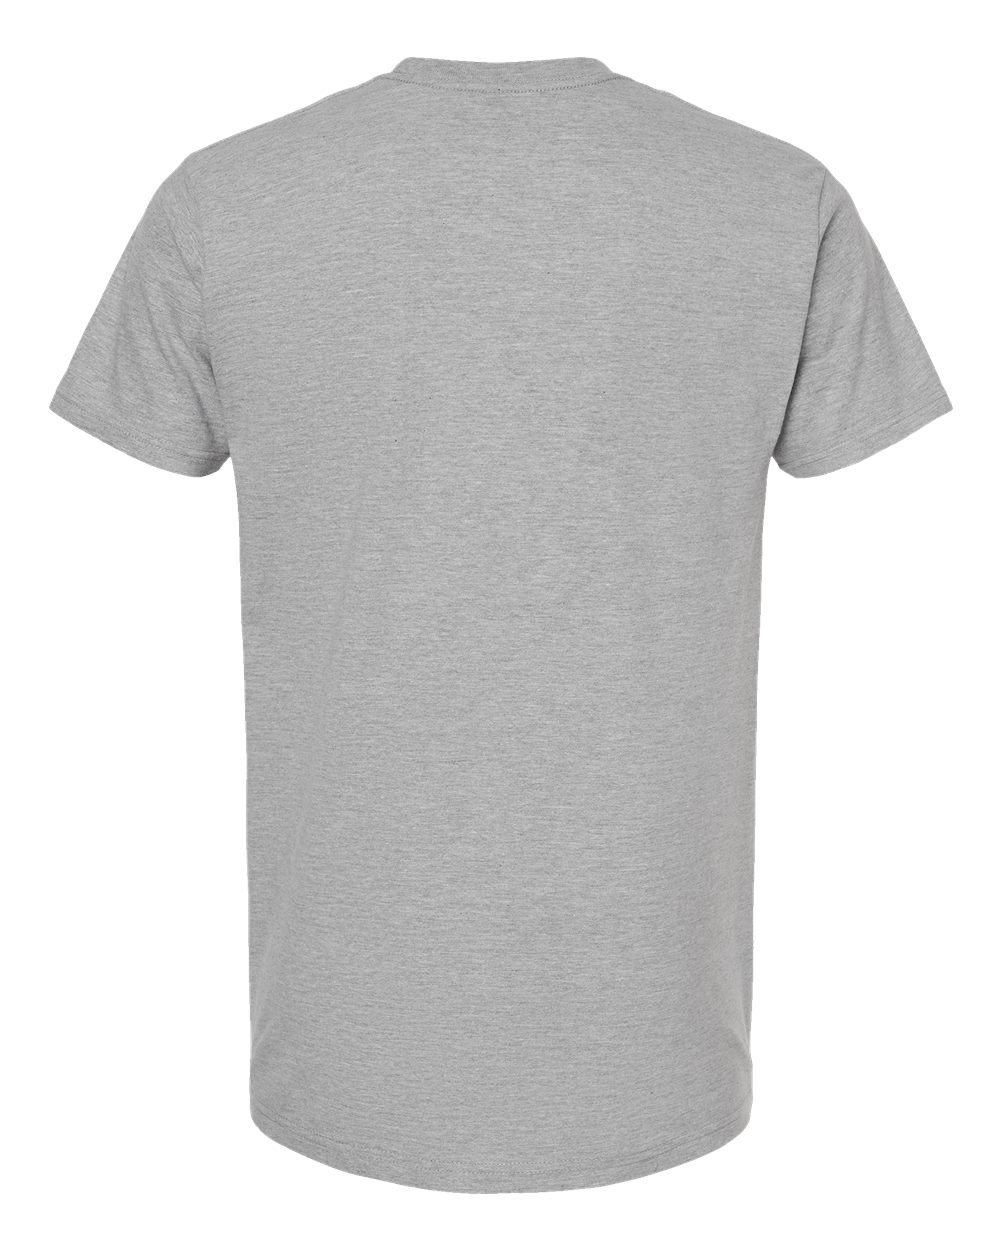 Tultex Men Short Sleeve Heavyweight Pocket T-Shirt 293 Up To 3XL | eBay